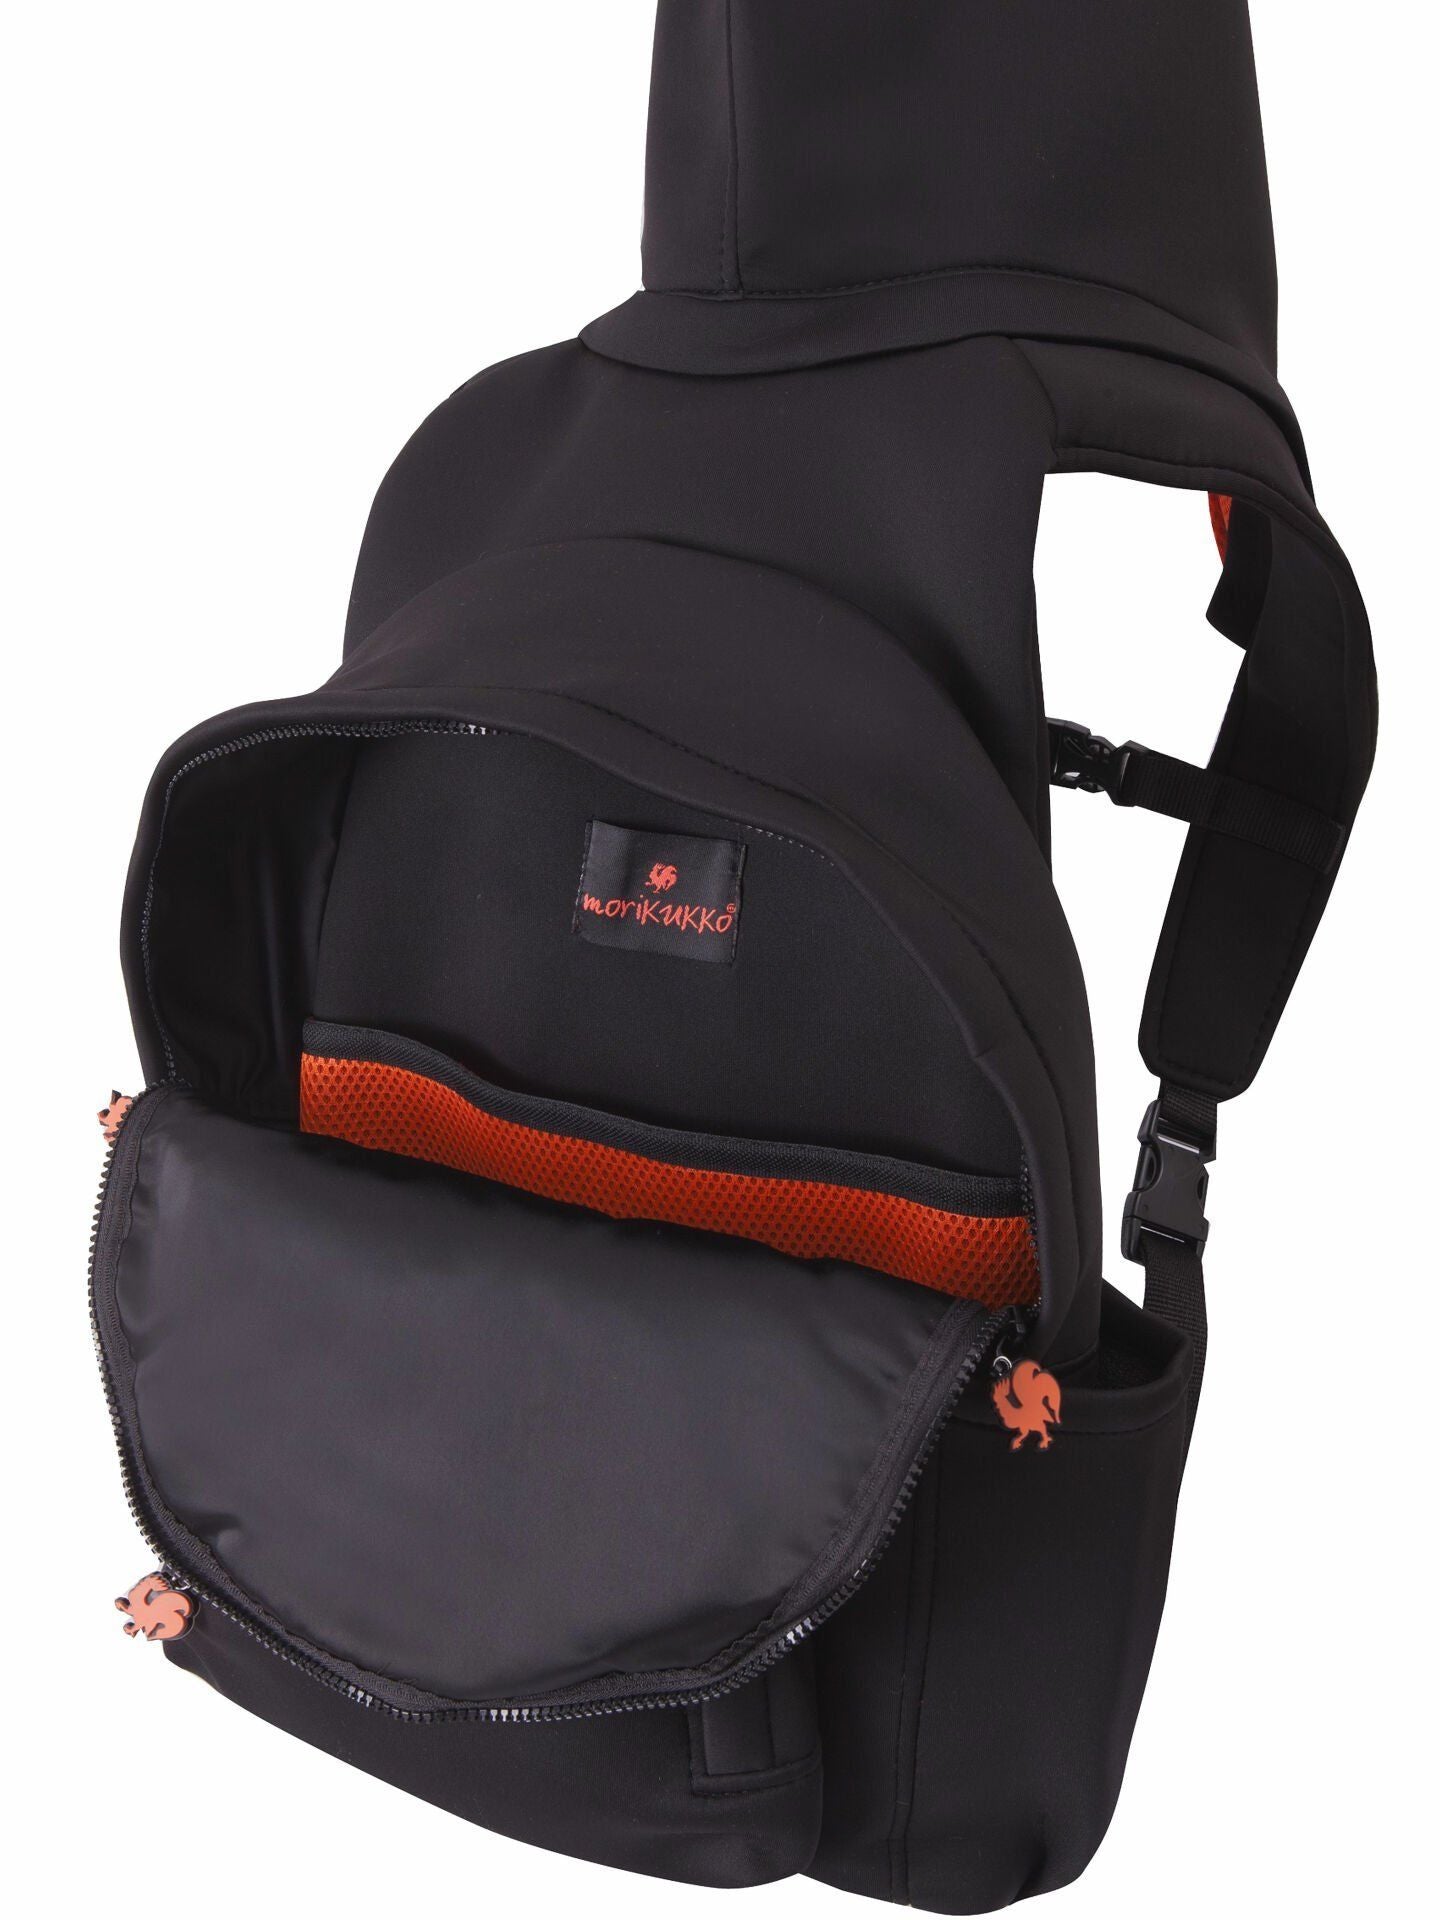 Morikukko Black Basic Neon Orange Hooded Backpack